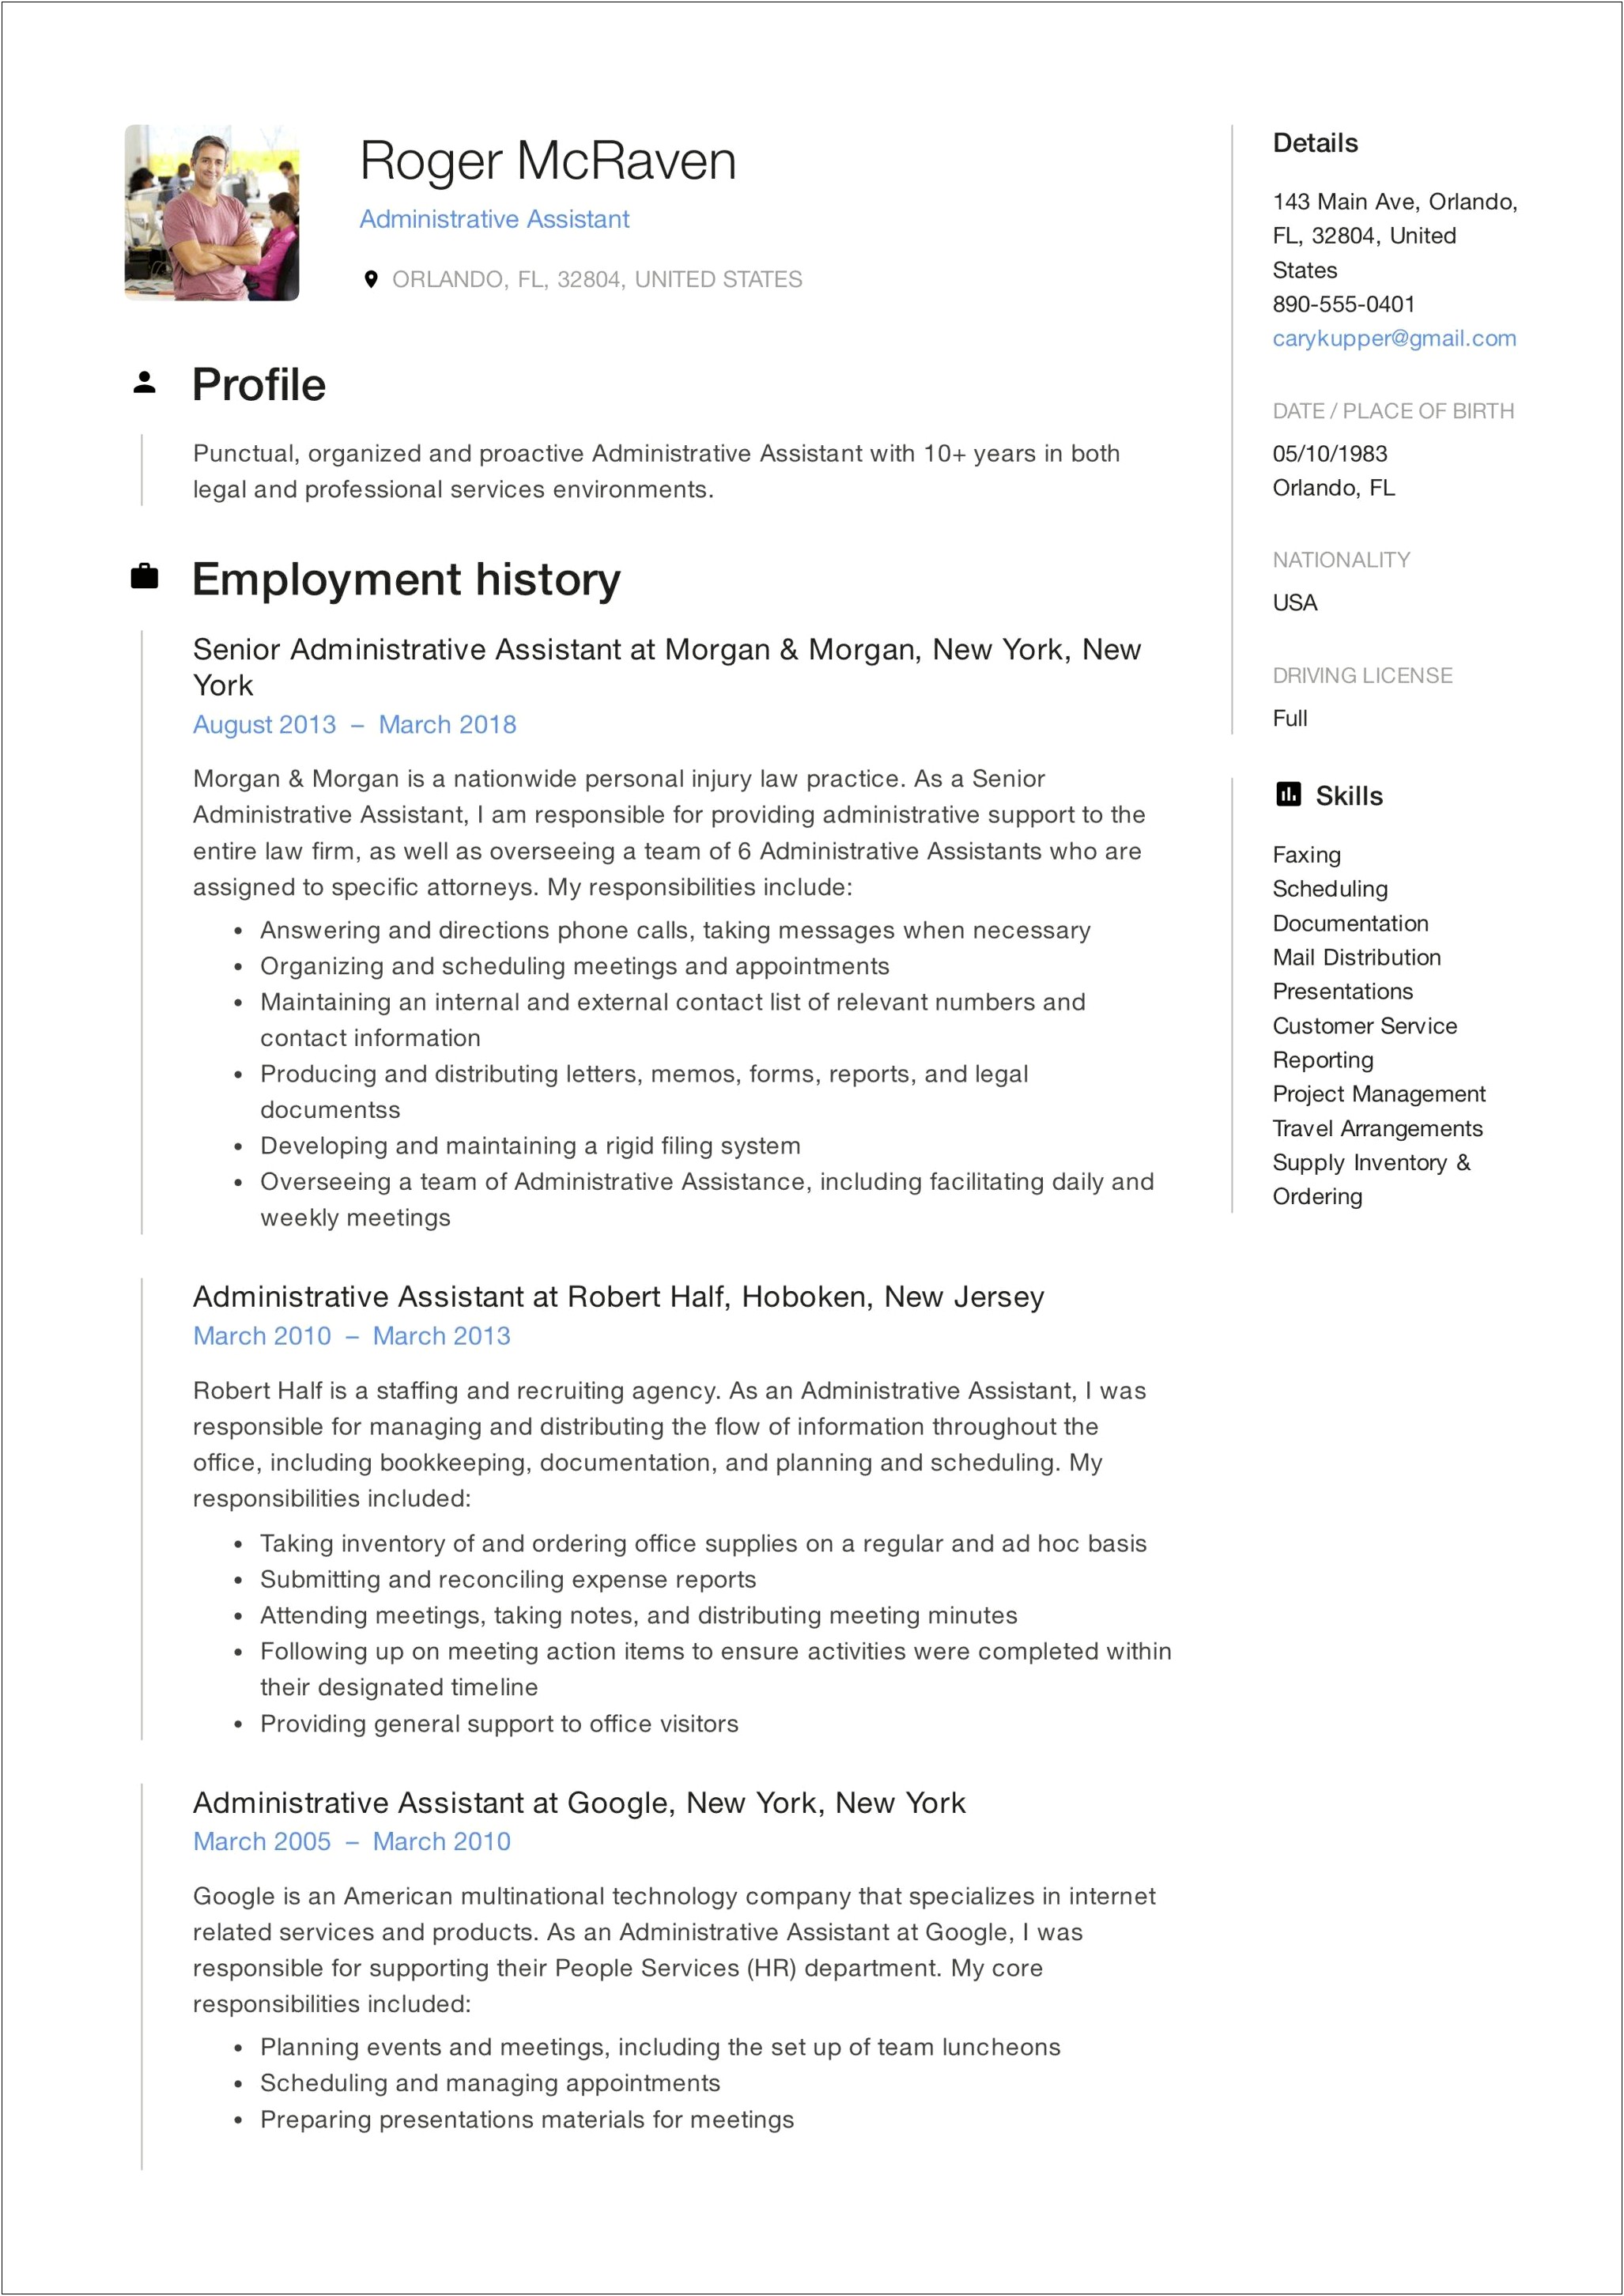 Job Description For Executive Assistant For Resume